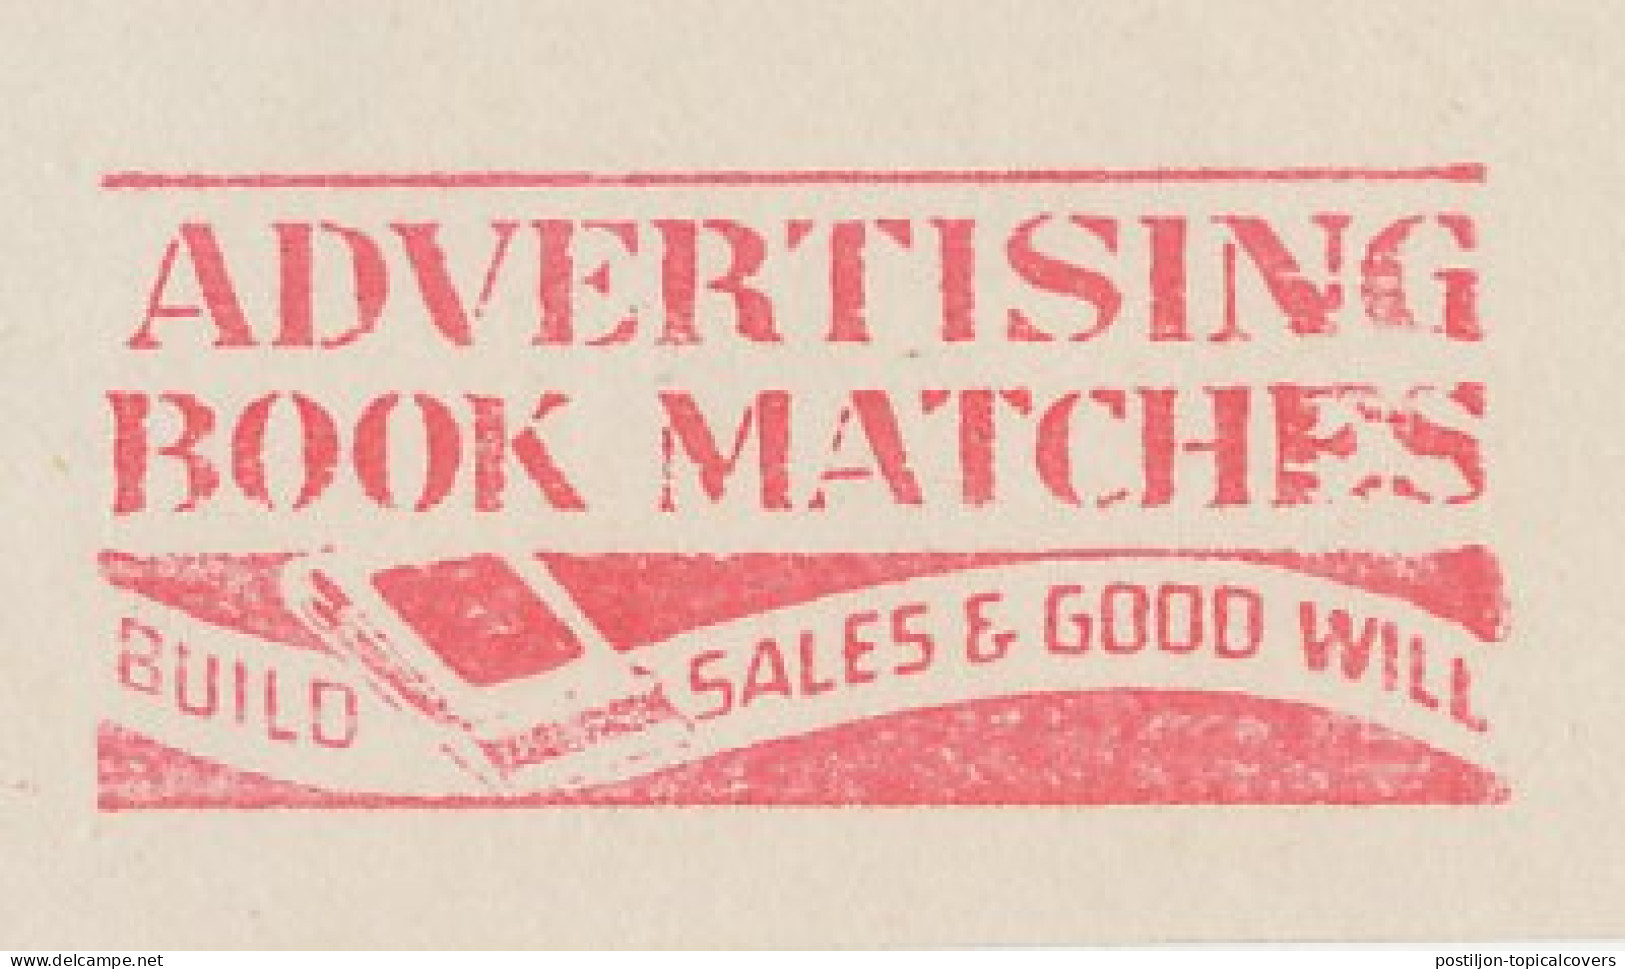 Meter Top Cut USA Book Matches - Advertising - Bombero